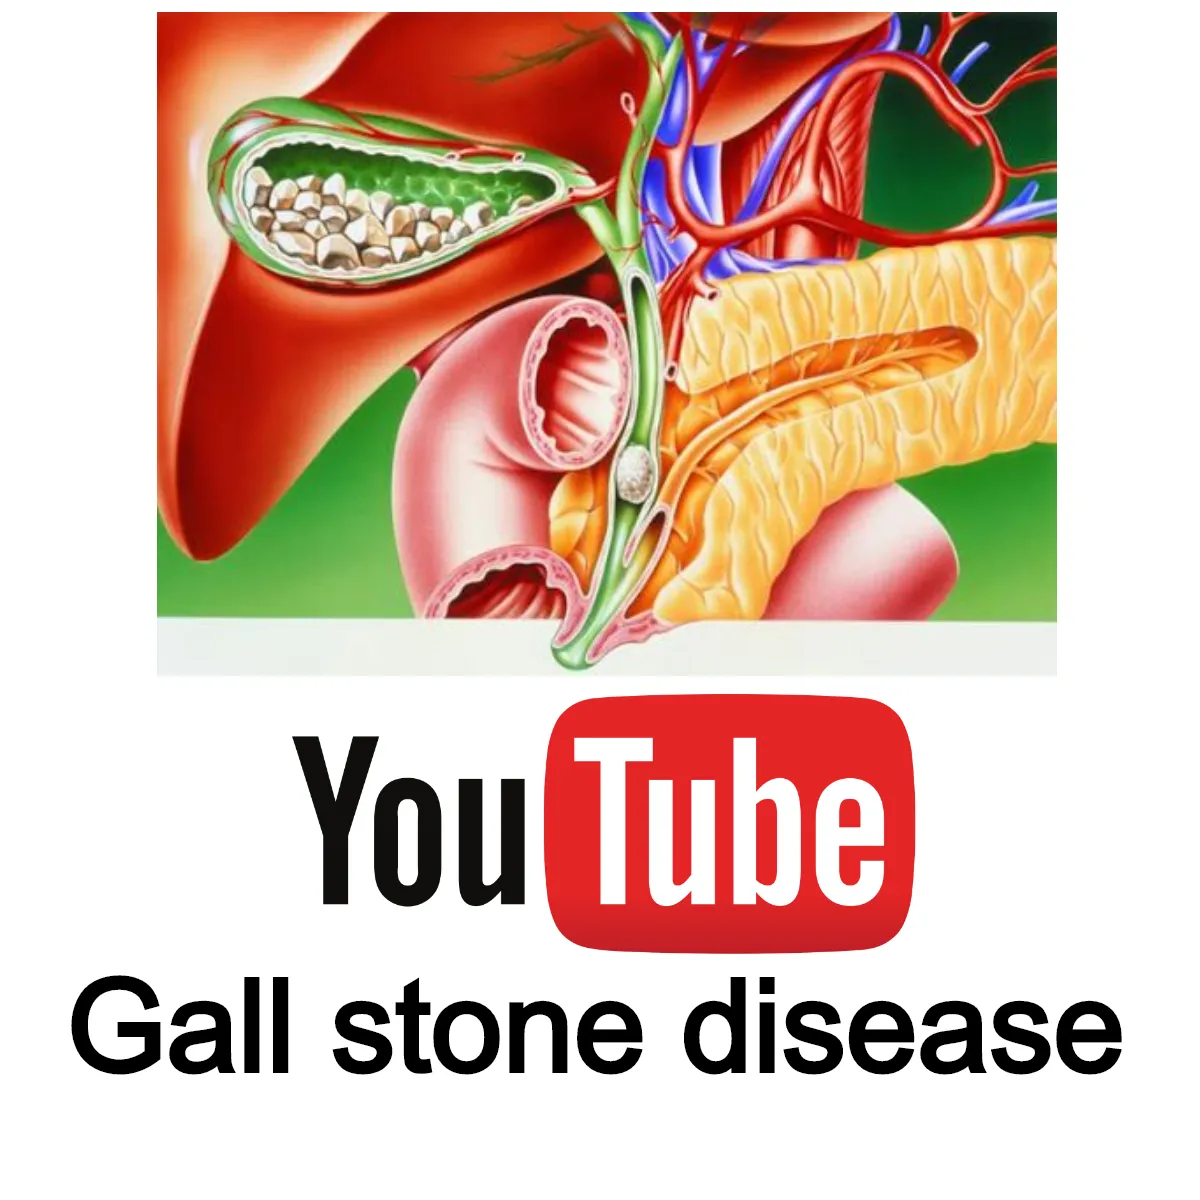 Gall stone disease